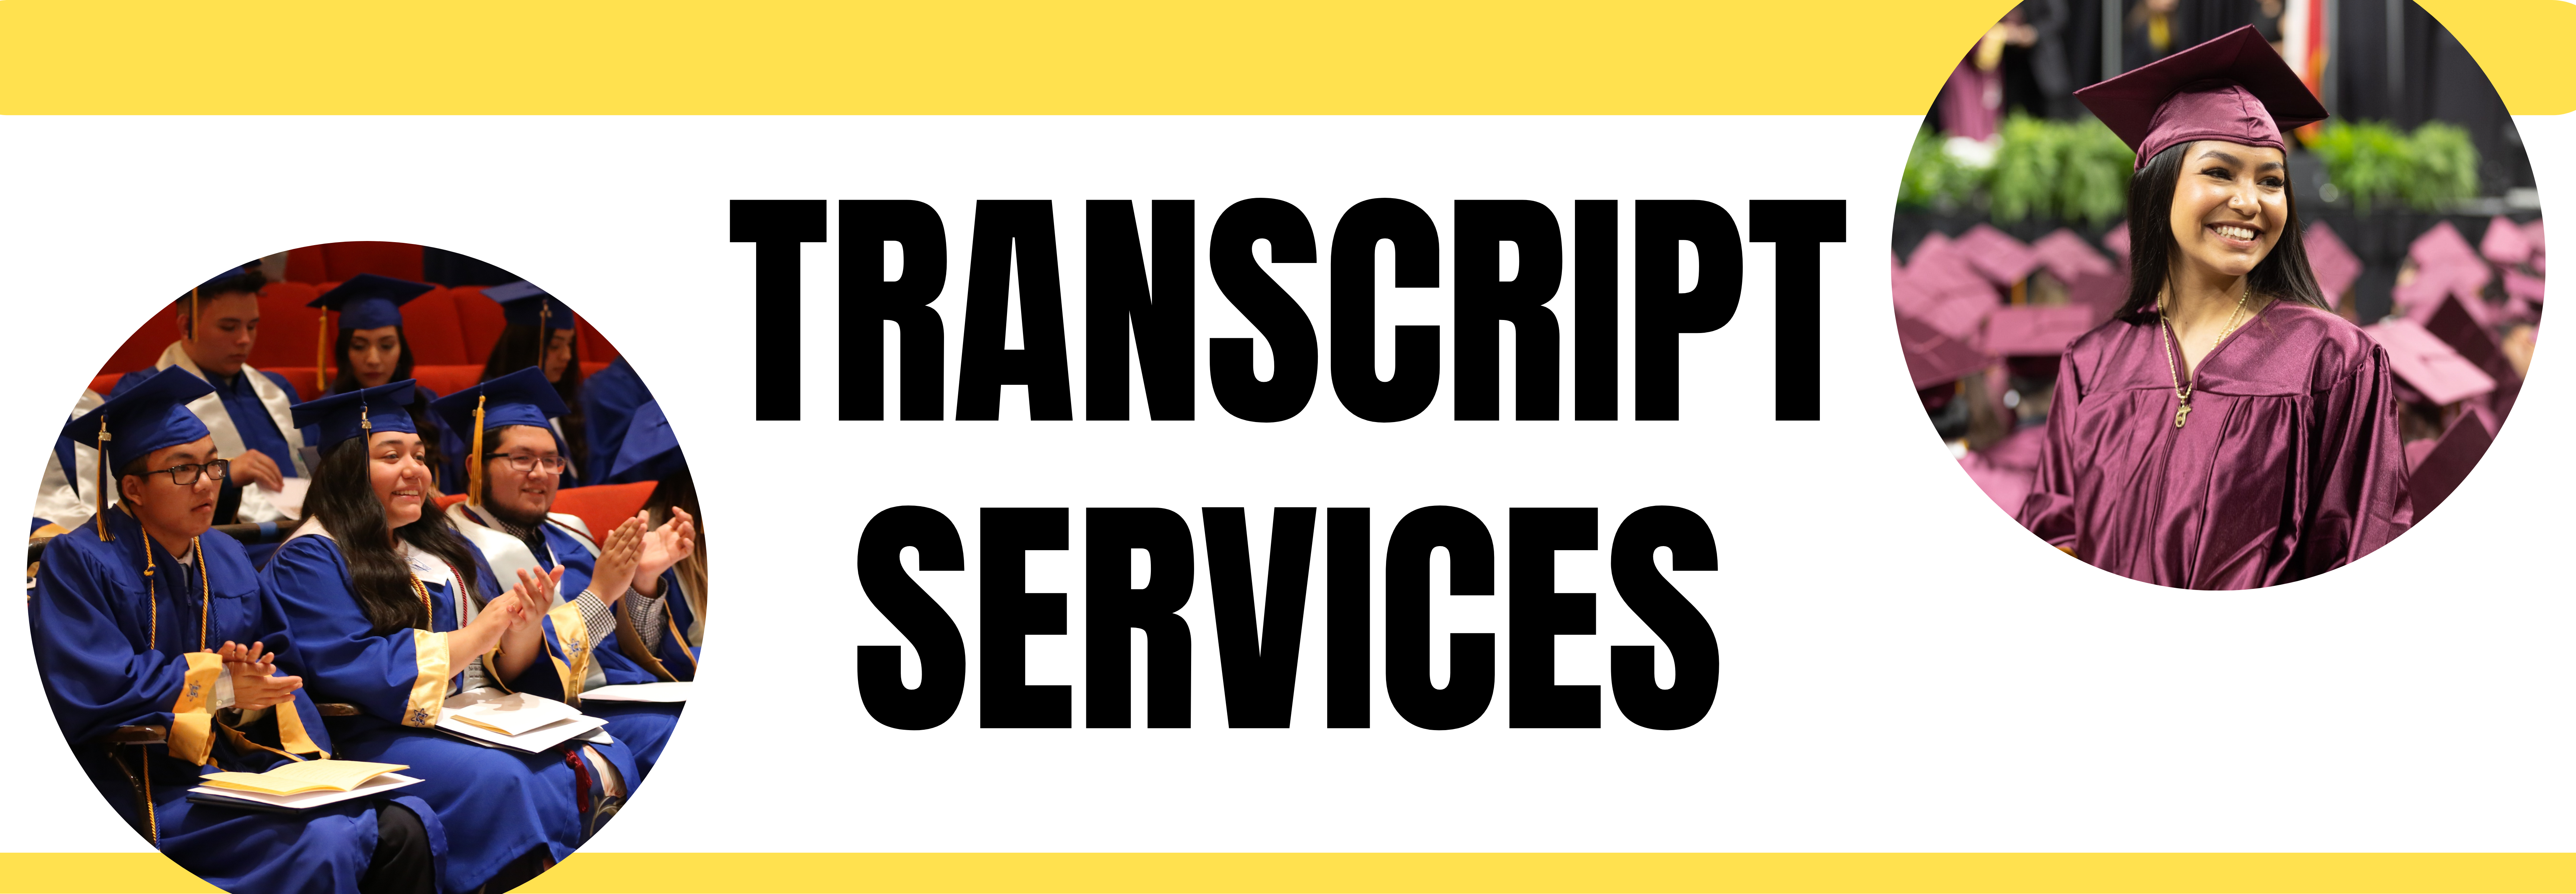 Transcript Services